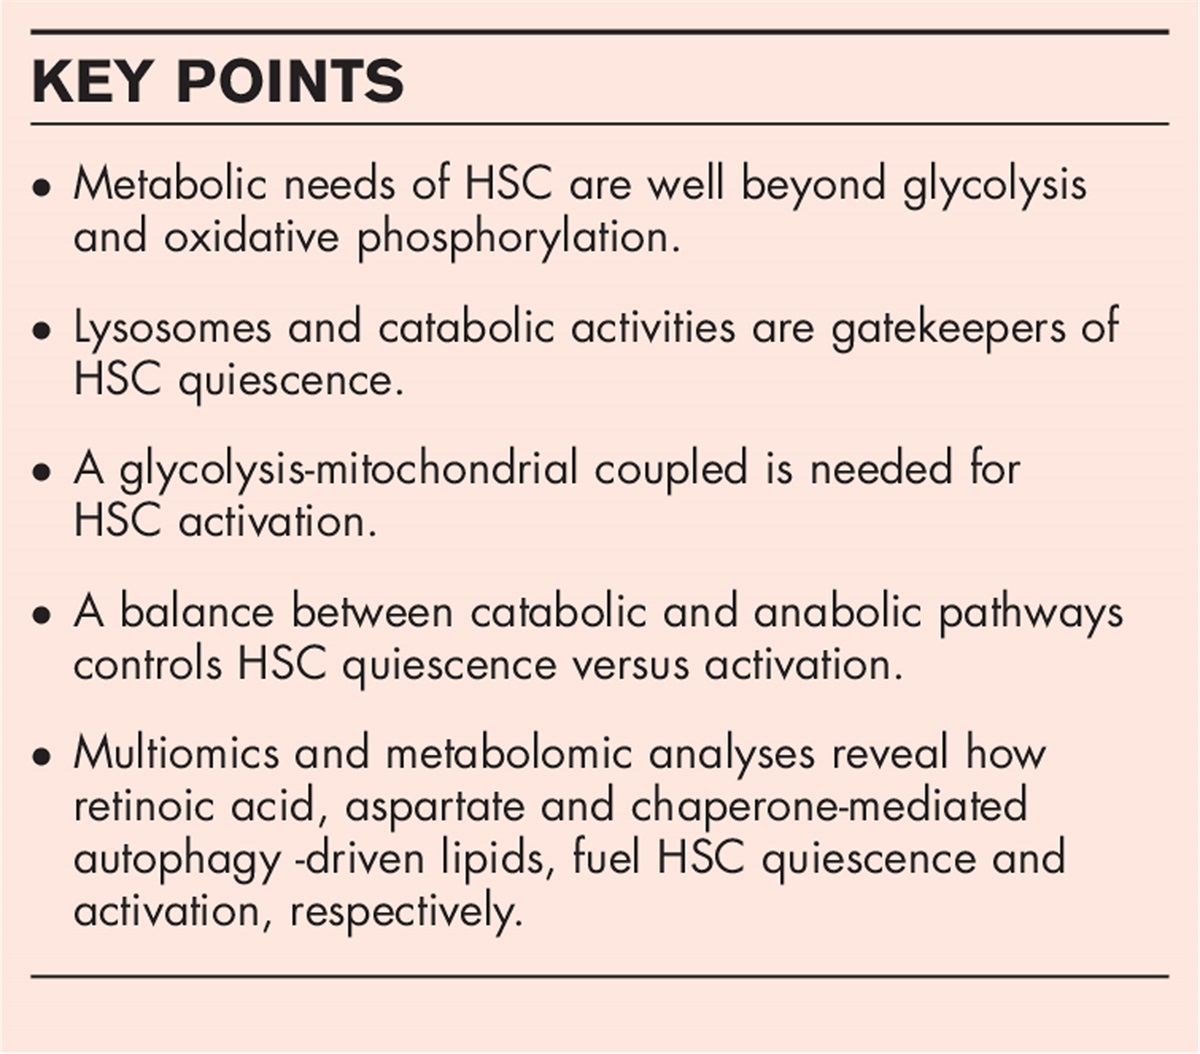 The new metabolic needs of hematopoietic stem cells